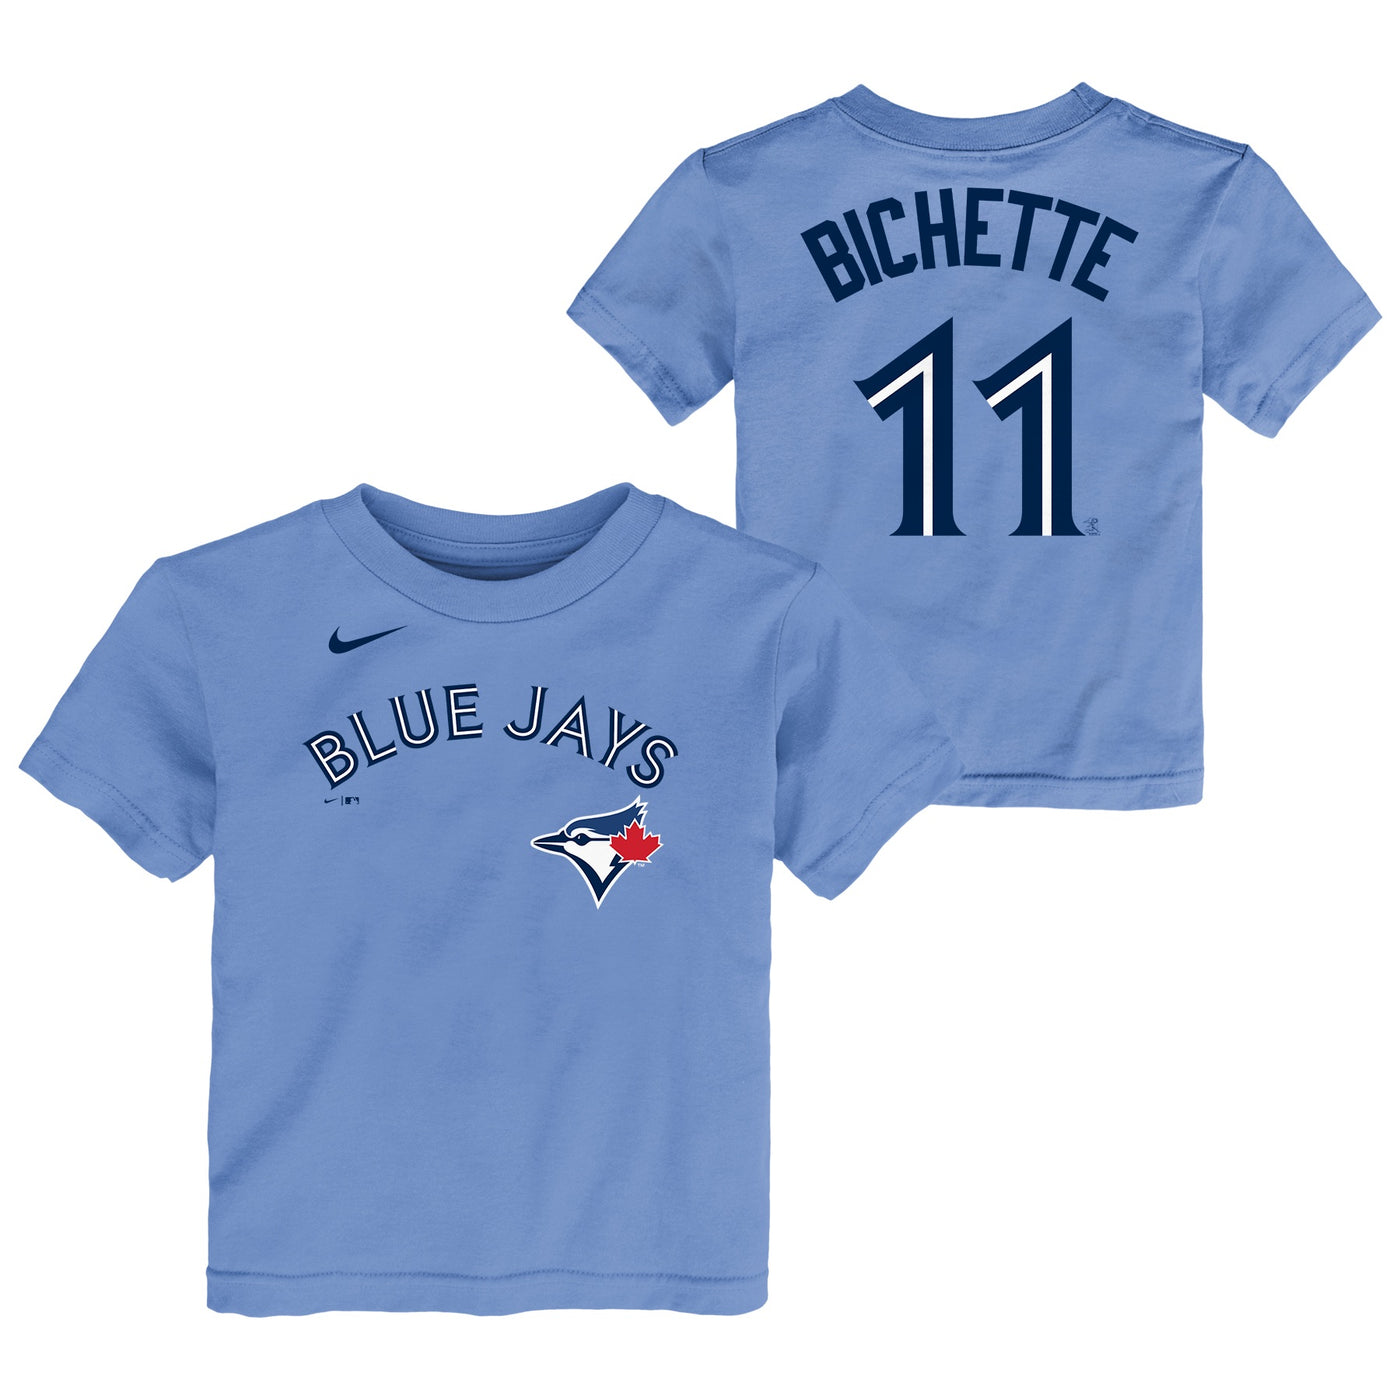 Nike Men's Bo Bichette Powder Blue Toronto Blue Jays Alternate Replica Player Name Jersey